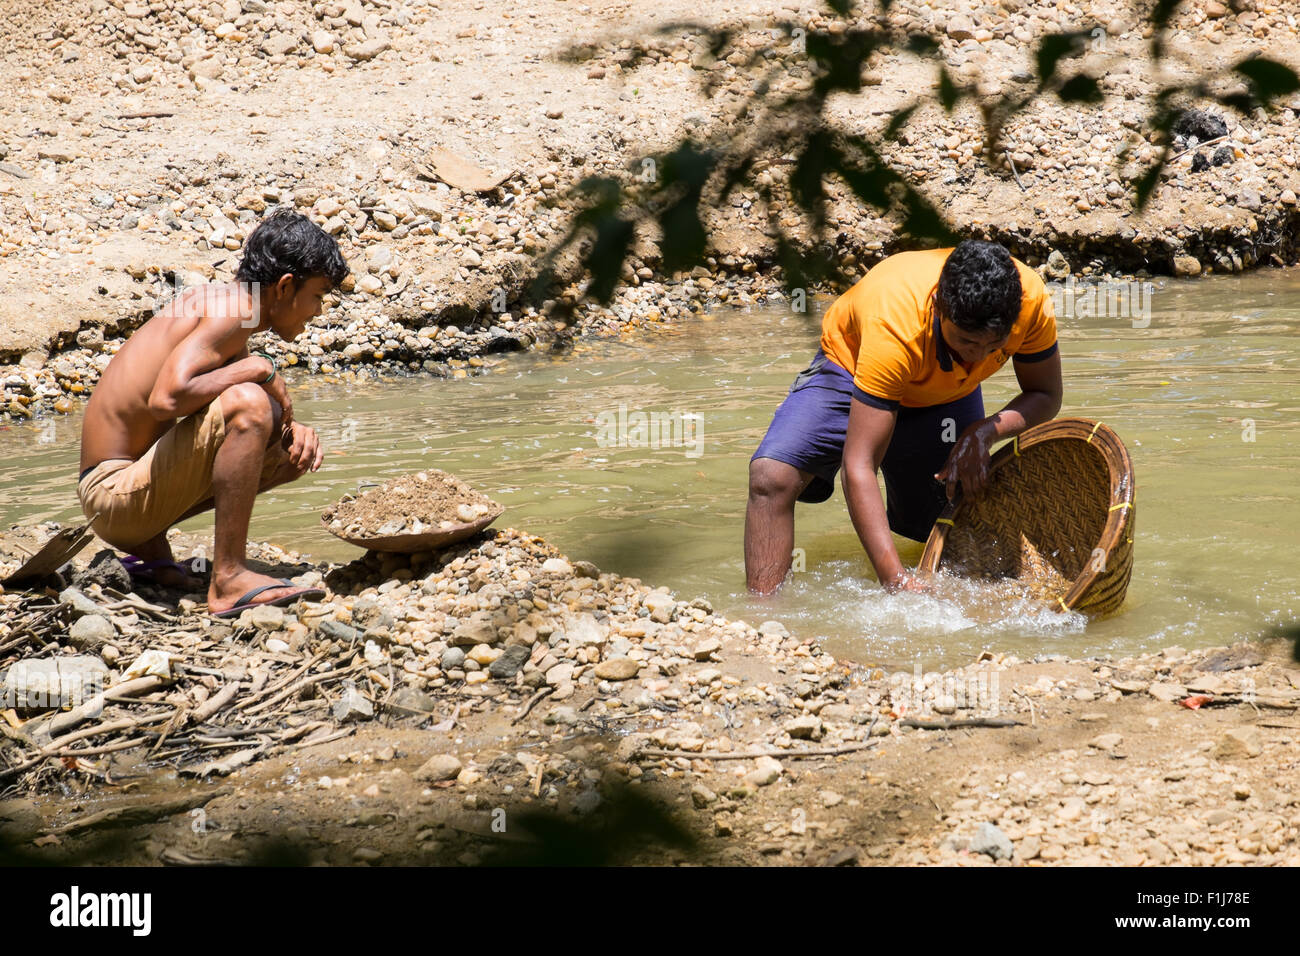 Two illegal gem prospectors pan for gemstones in the gravel deposits of a river in Uva province, Sri Lanka. Stock Photo